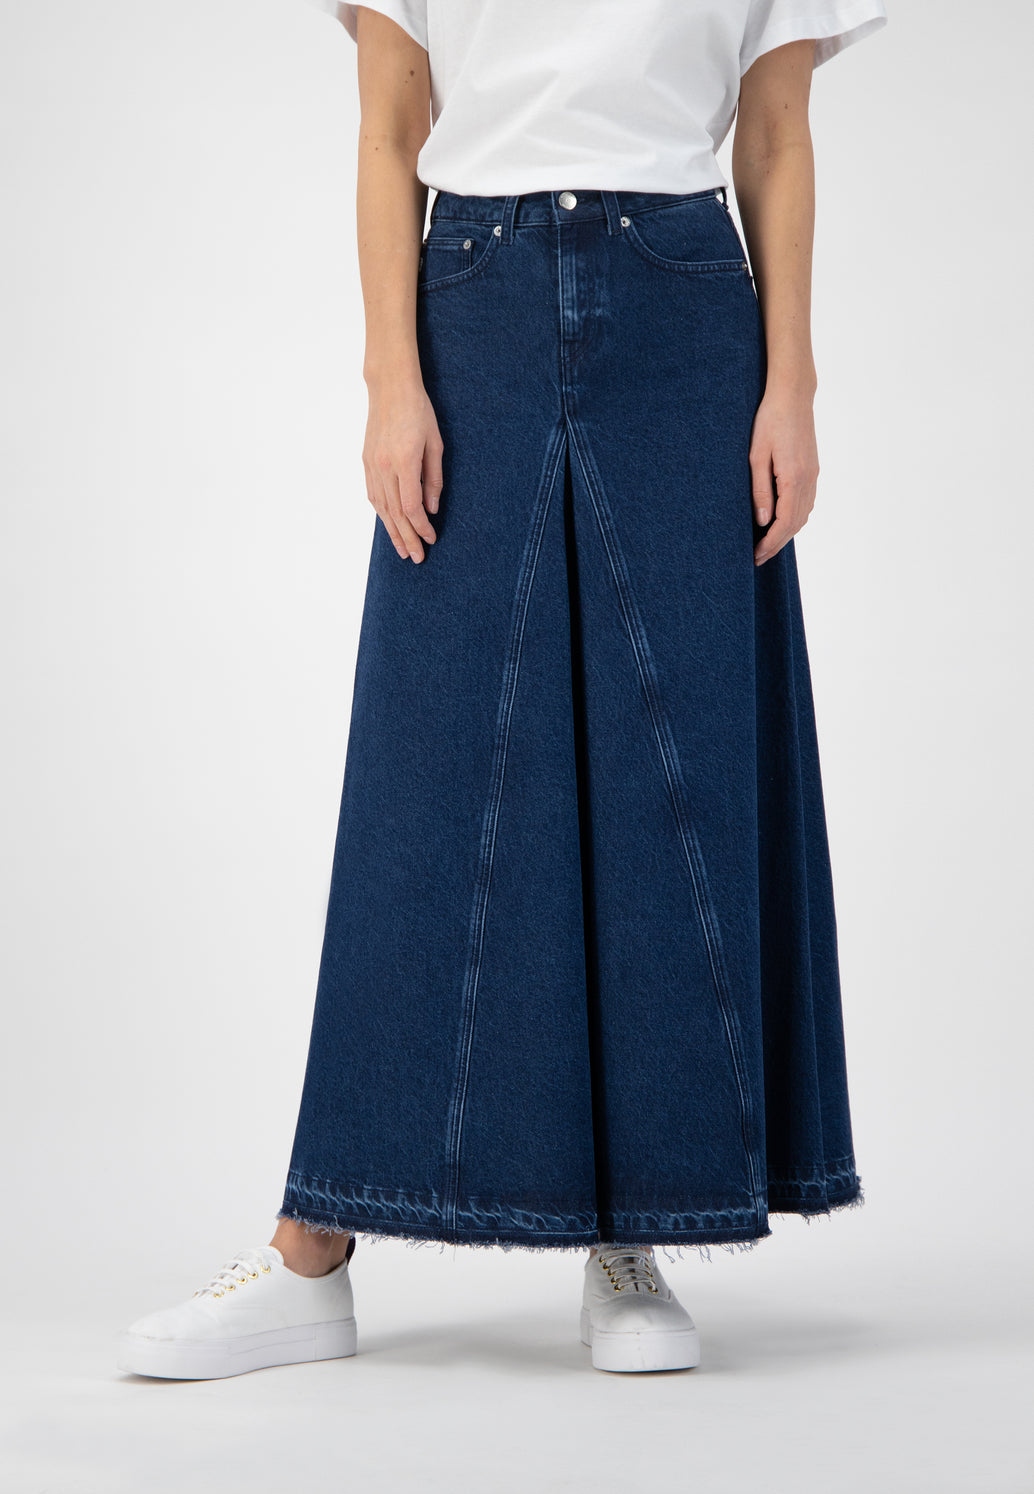 Shorts & Skirts - Sustainable Denim | MUD Jeans